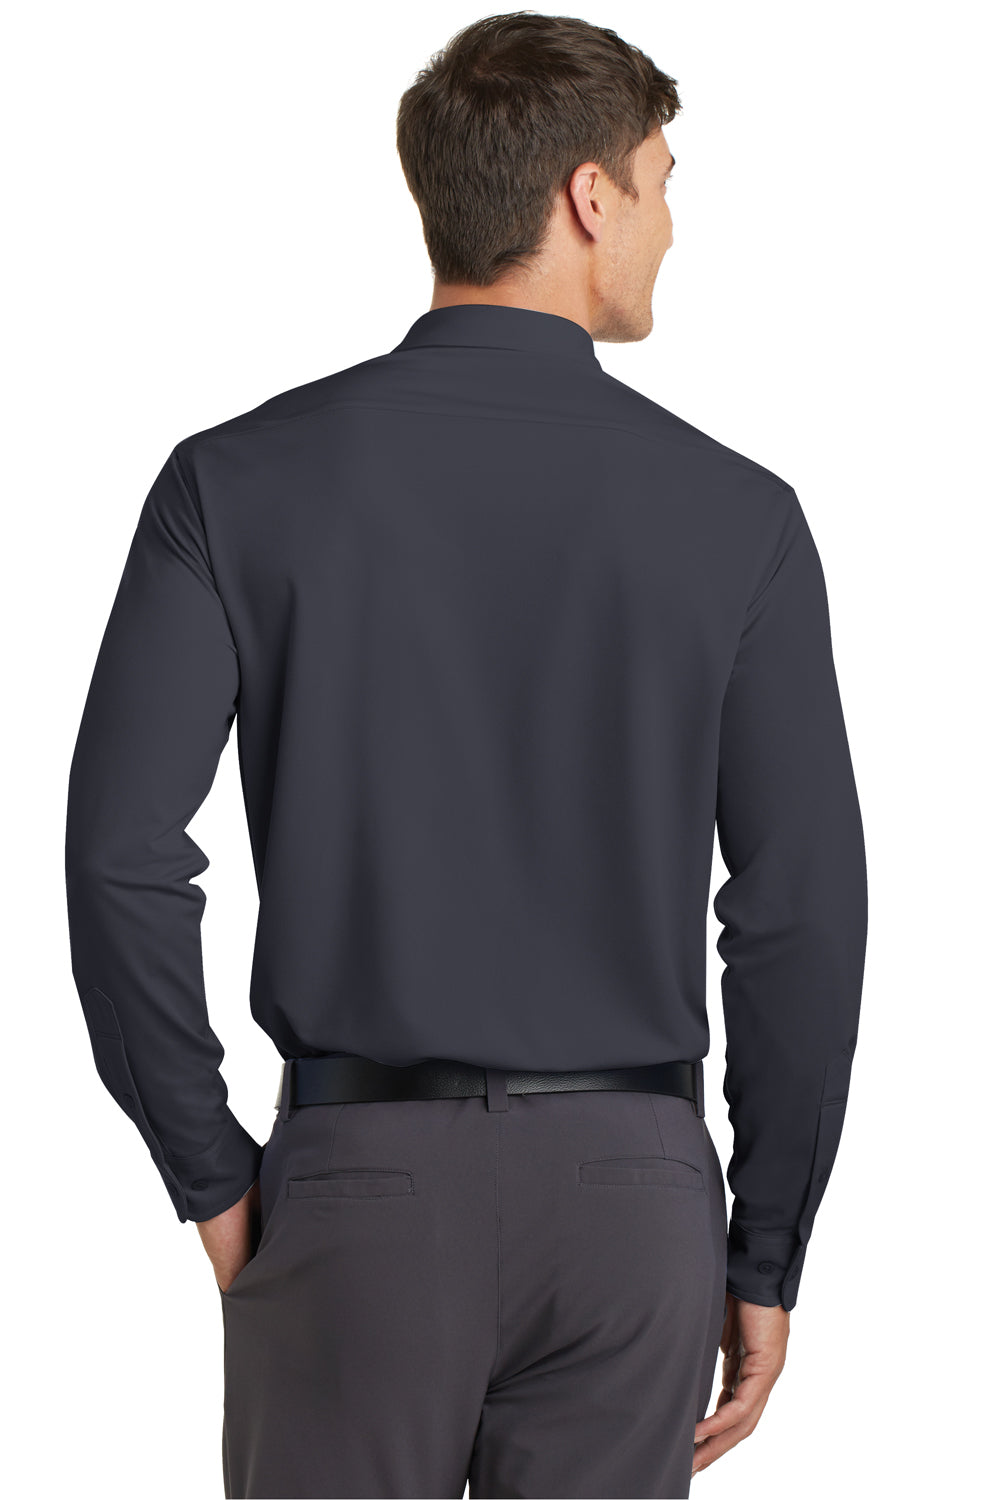 Port Authority K570 Mens Dimension Moisture Wicking Long Sleeve Button Down Shirt w/ Pocket Battleship Grey Back